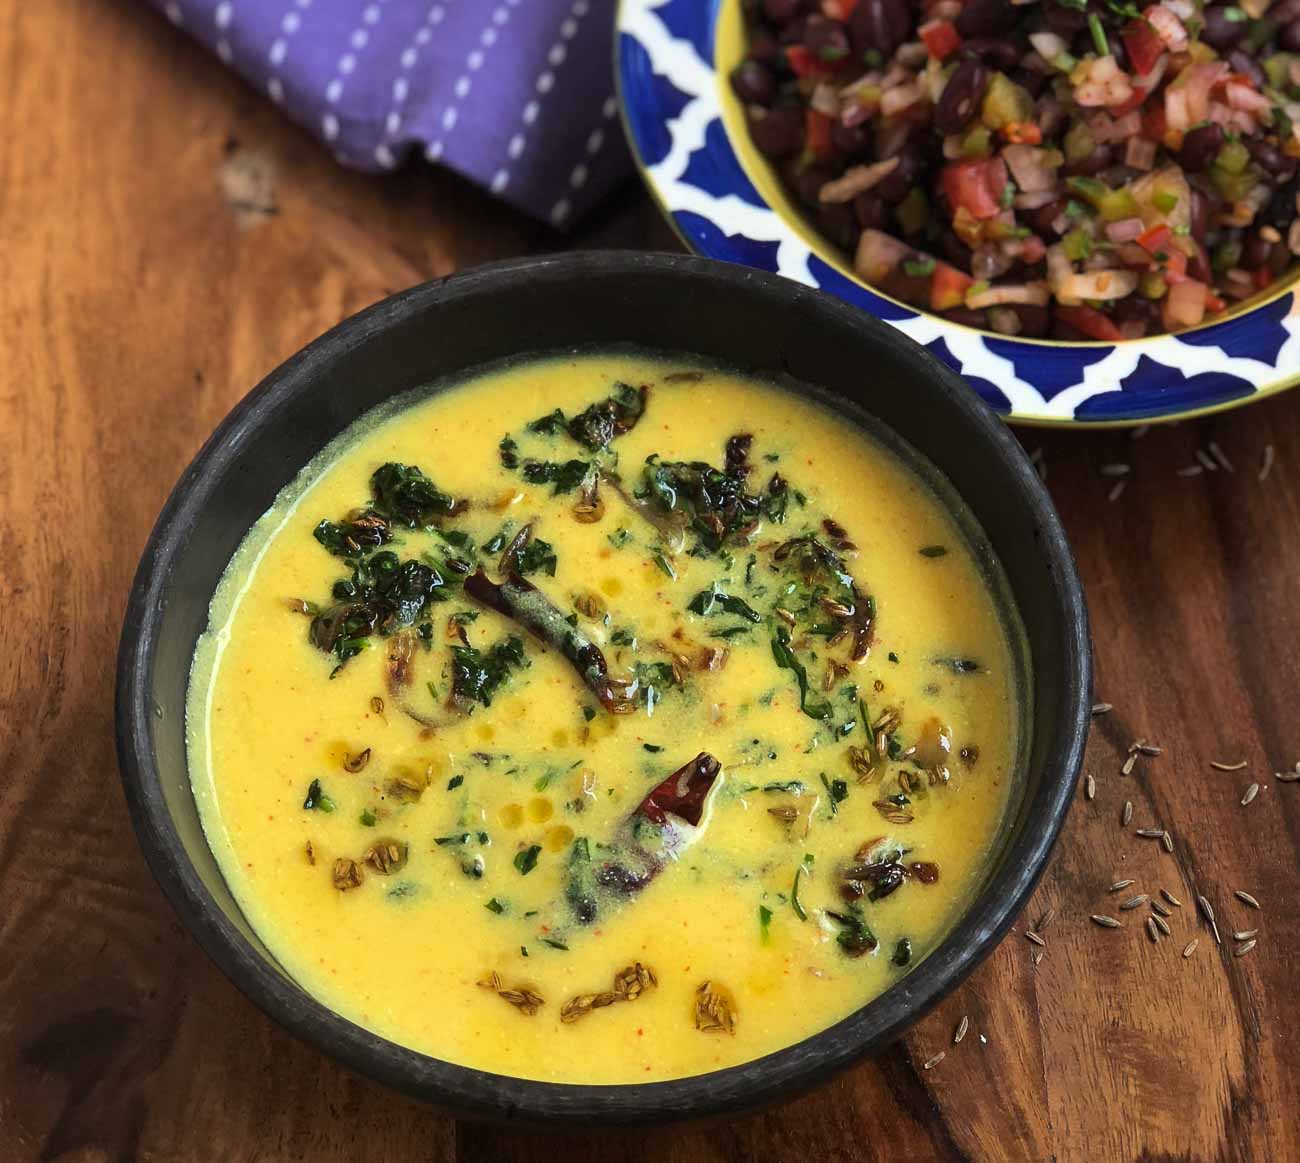 Punjabi Methi Kadhi Recipe - Fenugreek Leaf Yogurt Curry